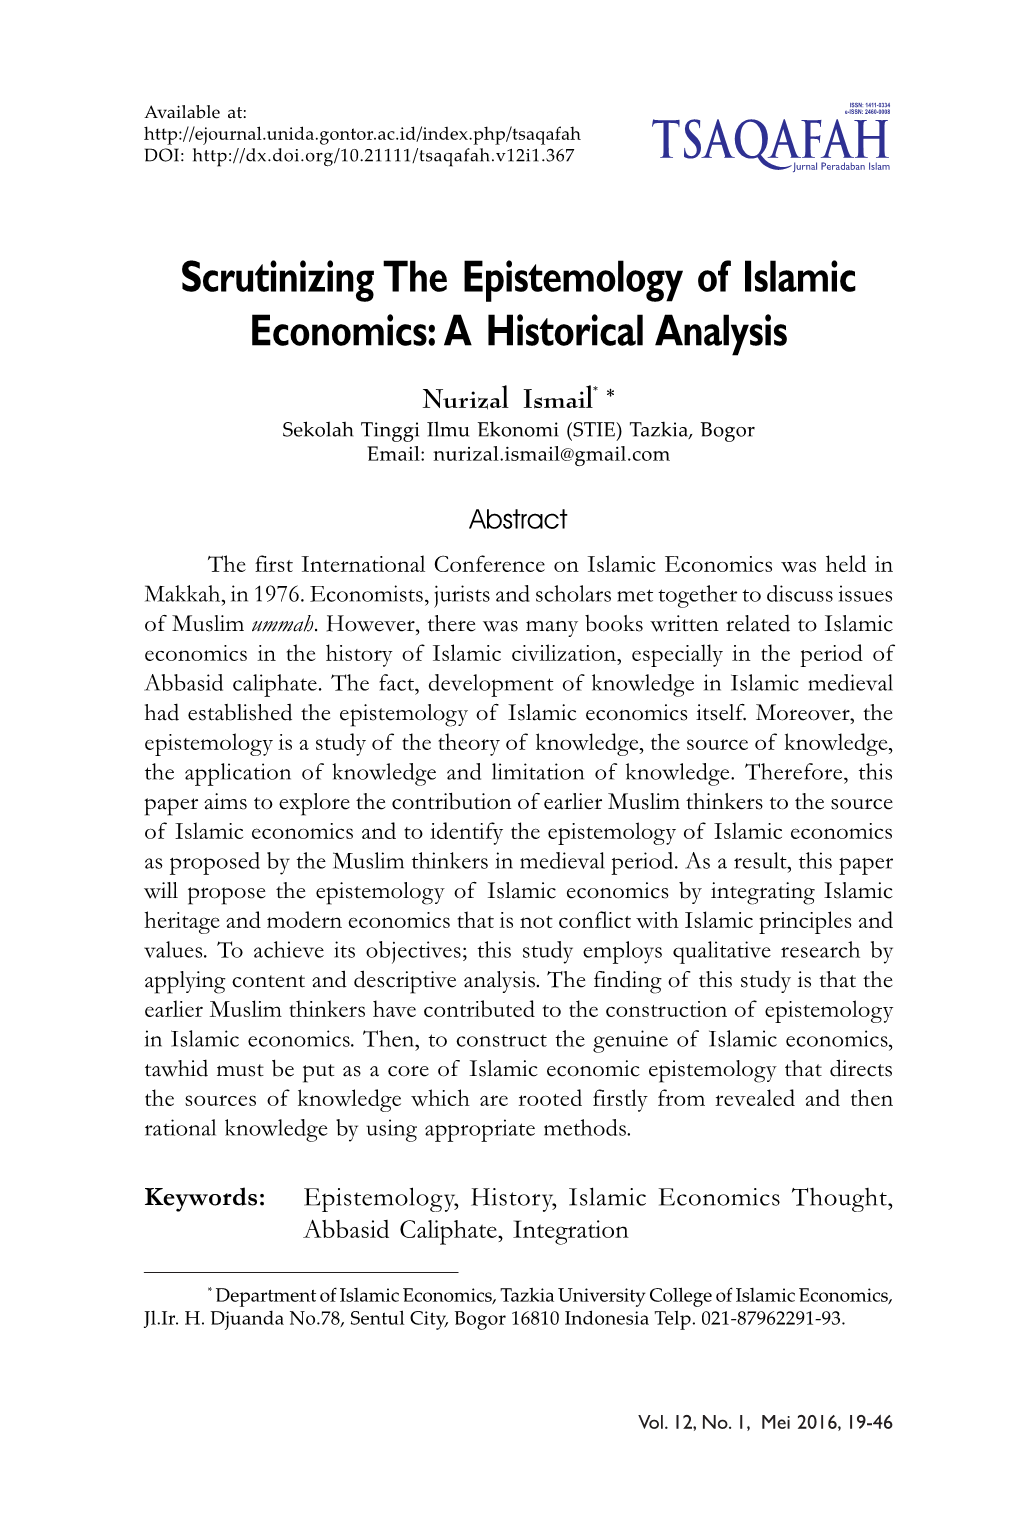 Scrutinizing the Epistemology of Islamic Economics: a Historical Analysis